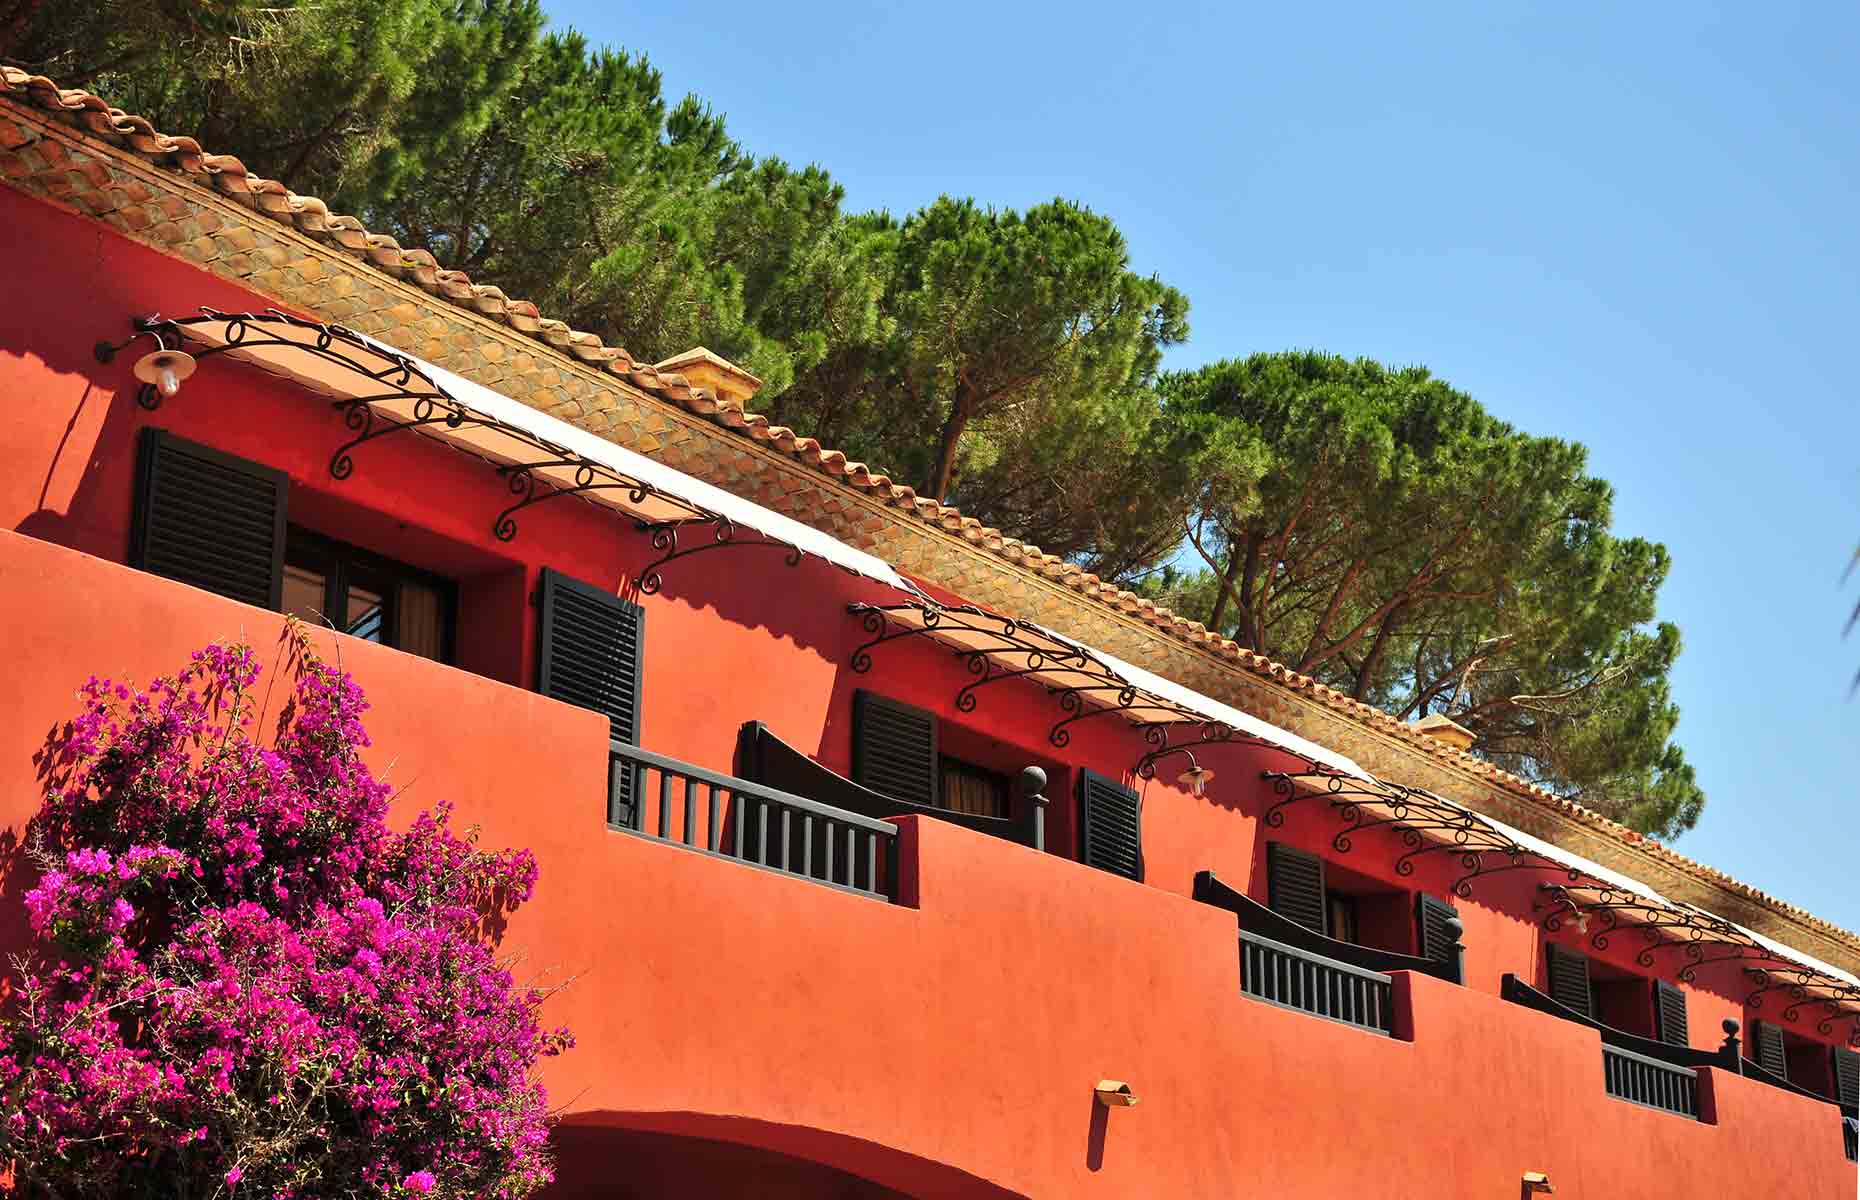 La Signora - Hôtel Calvi, Corse